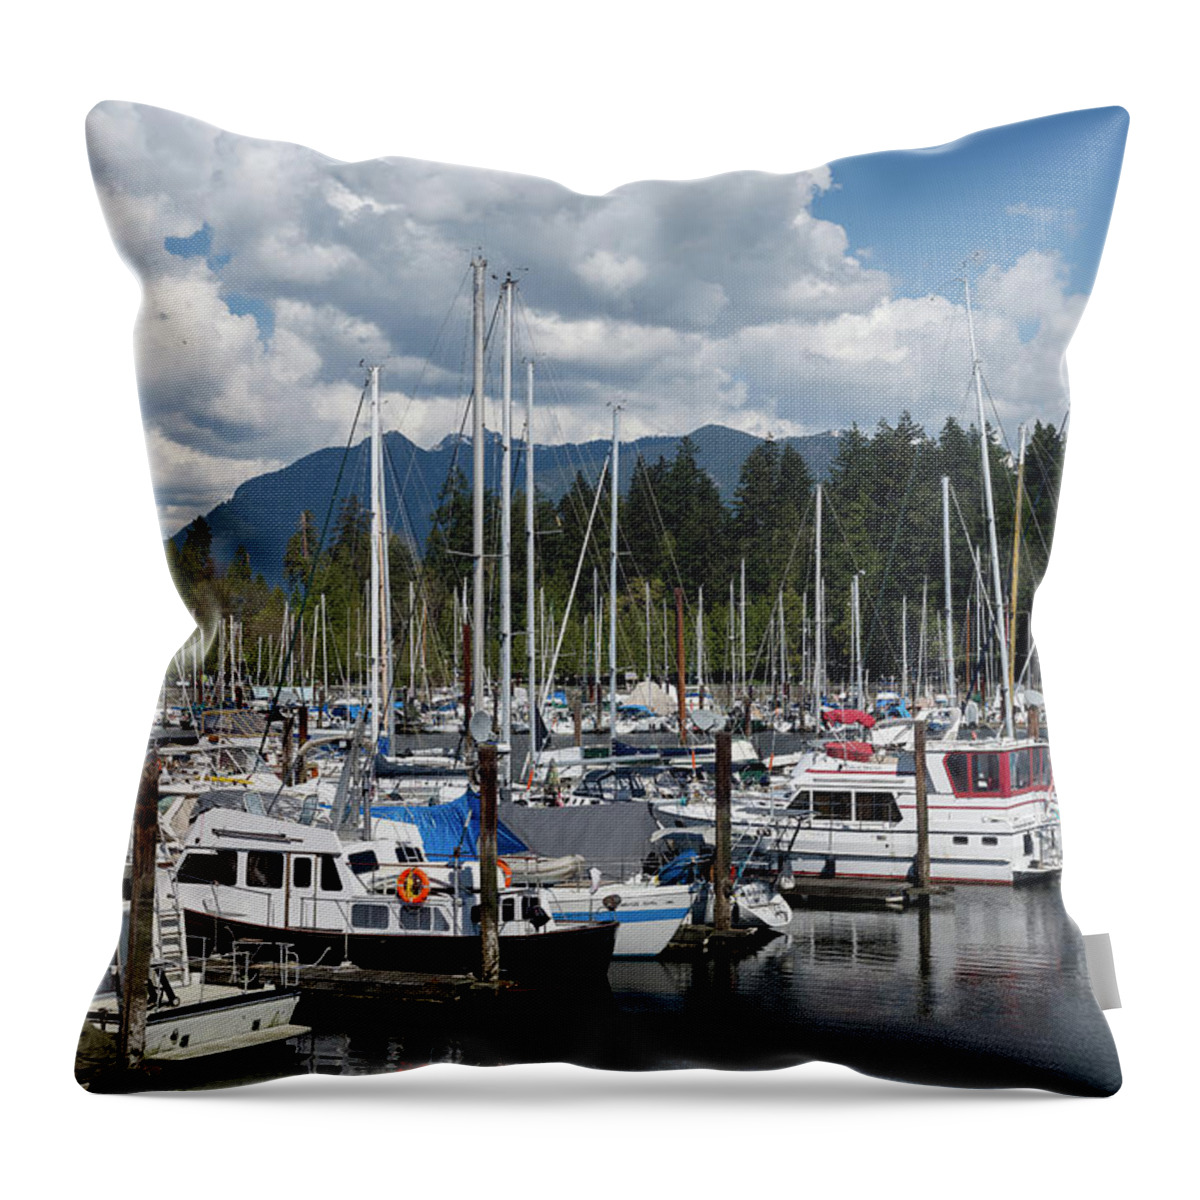 Jennifer Kane Webb Throw Pillow featuring the photograph Vancouver Harbour by Jennifer Kane Webb